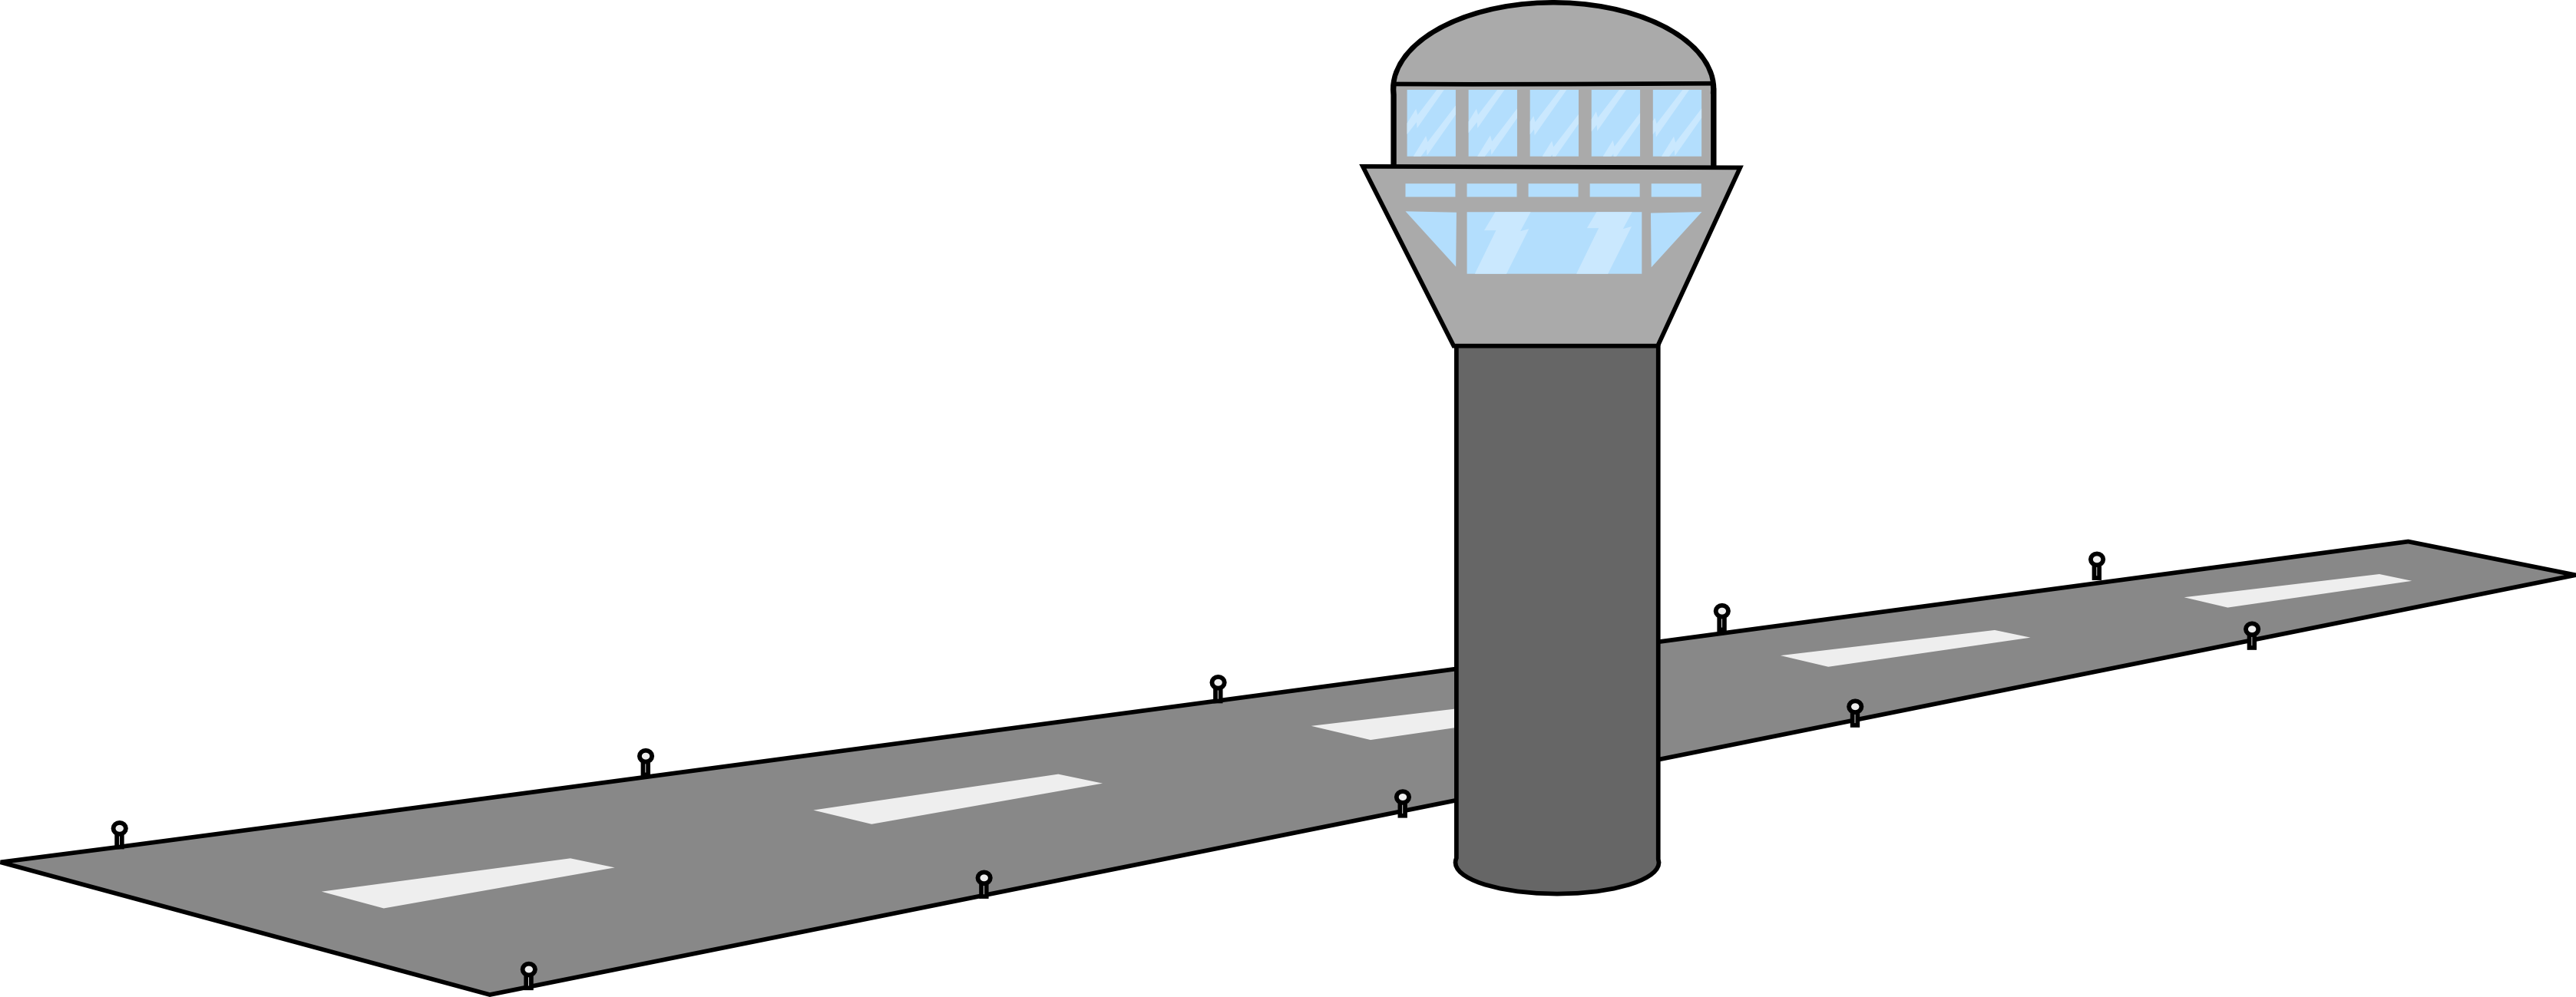 Free Airport Tower  Runway Clip Art